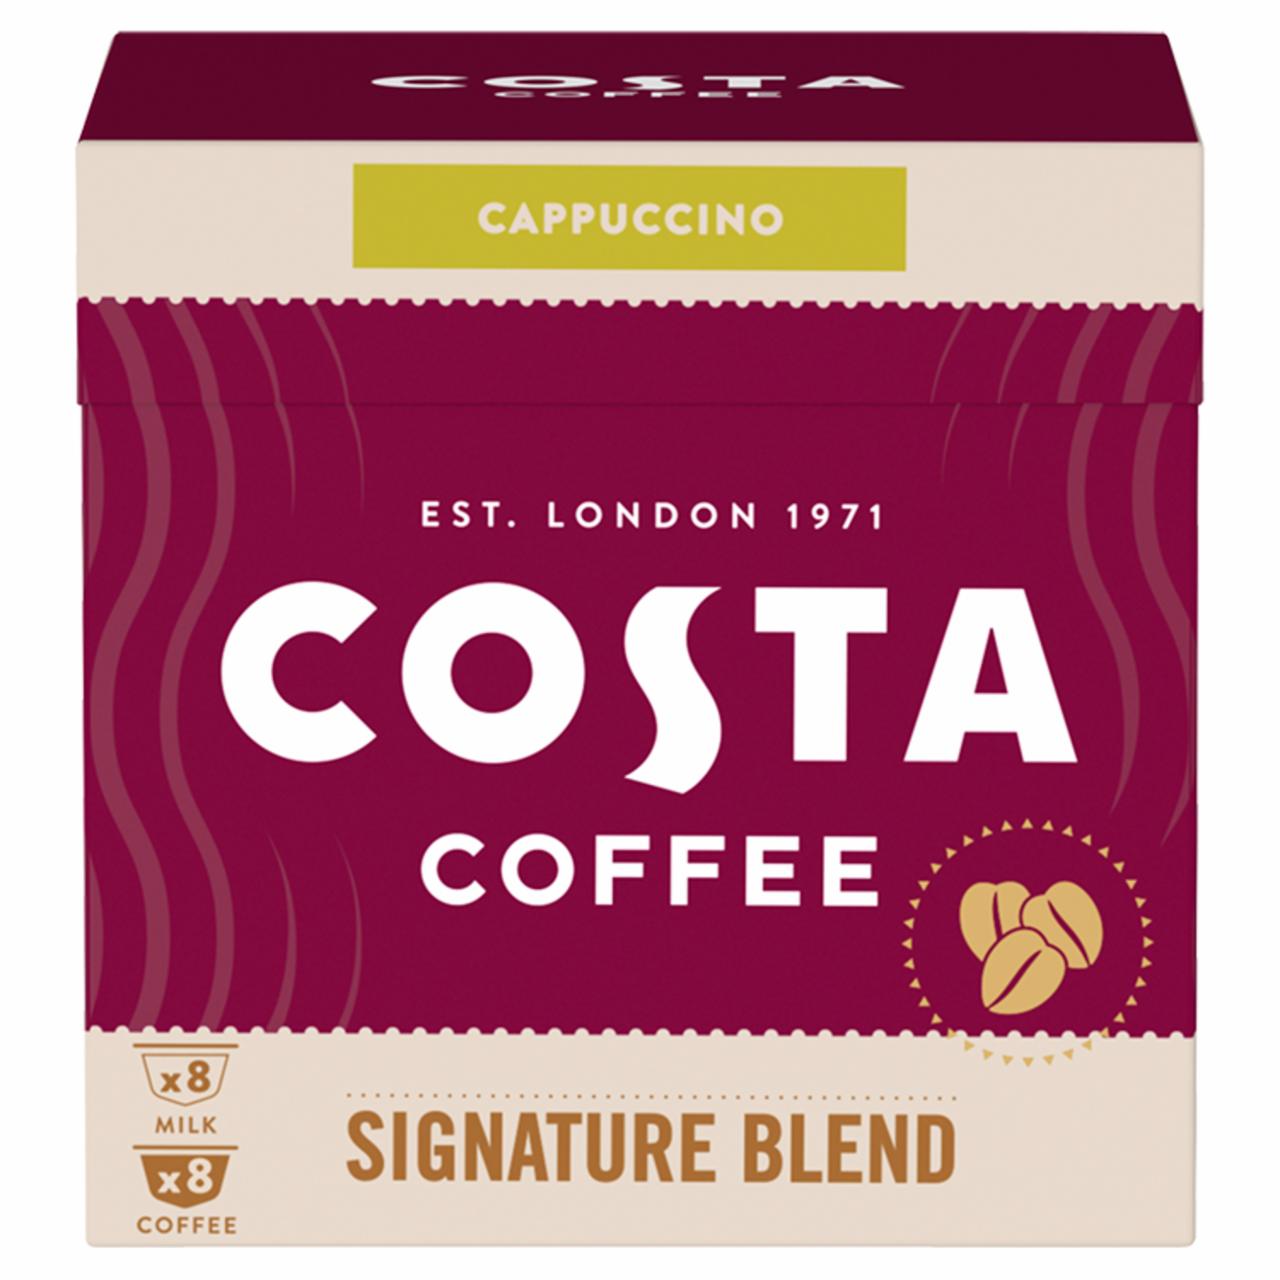 Képek - Costa Coffee Signature Blend Cappuccino tej- és kávékapszula